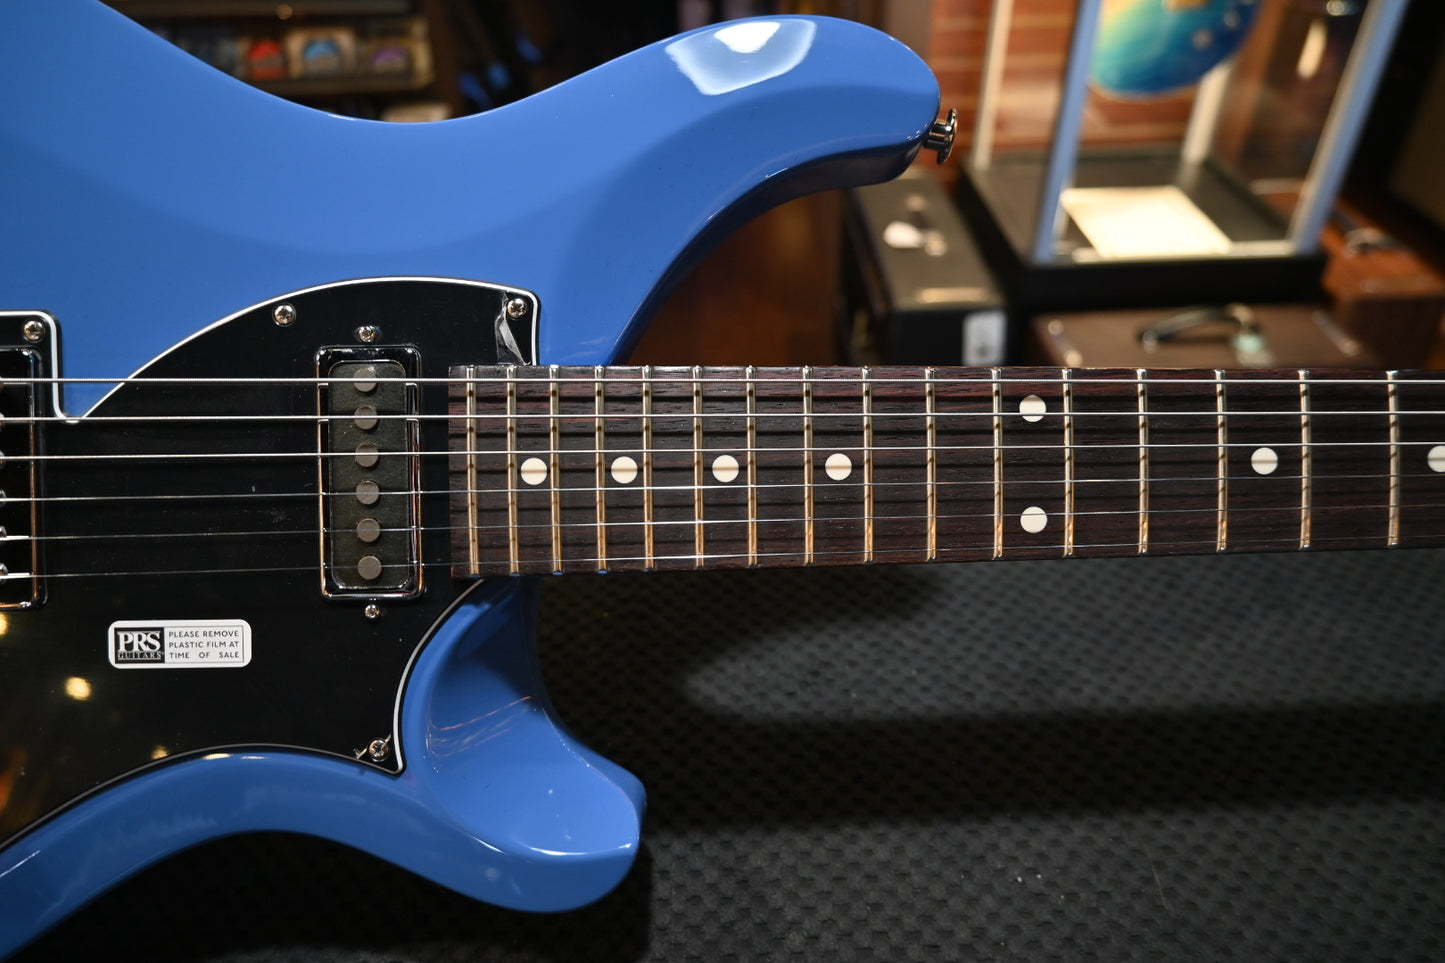 PRS S2 Vela - Mahi Blue Guitar #6330 - Danville Music